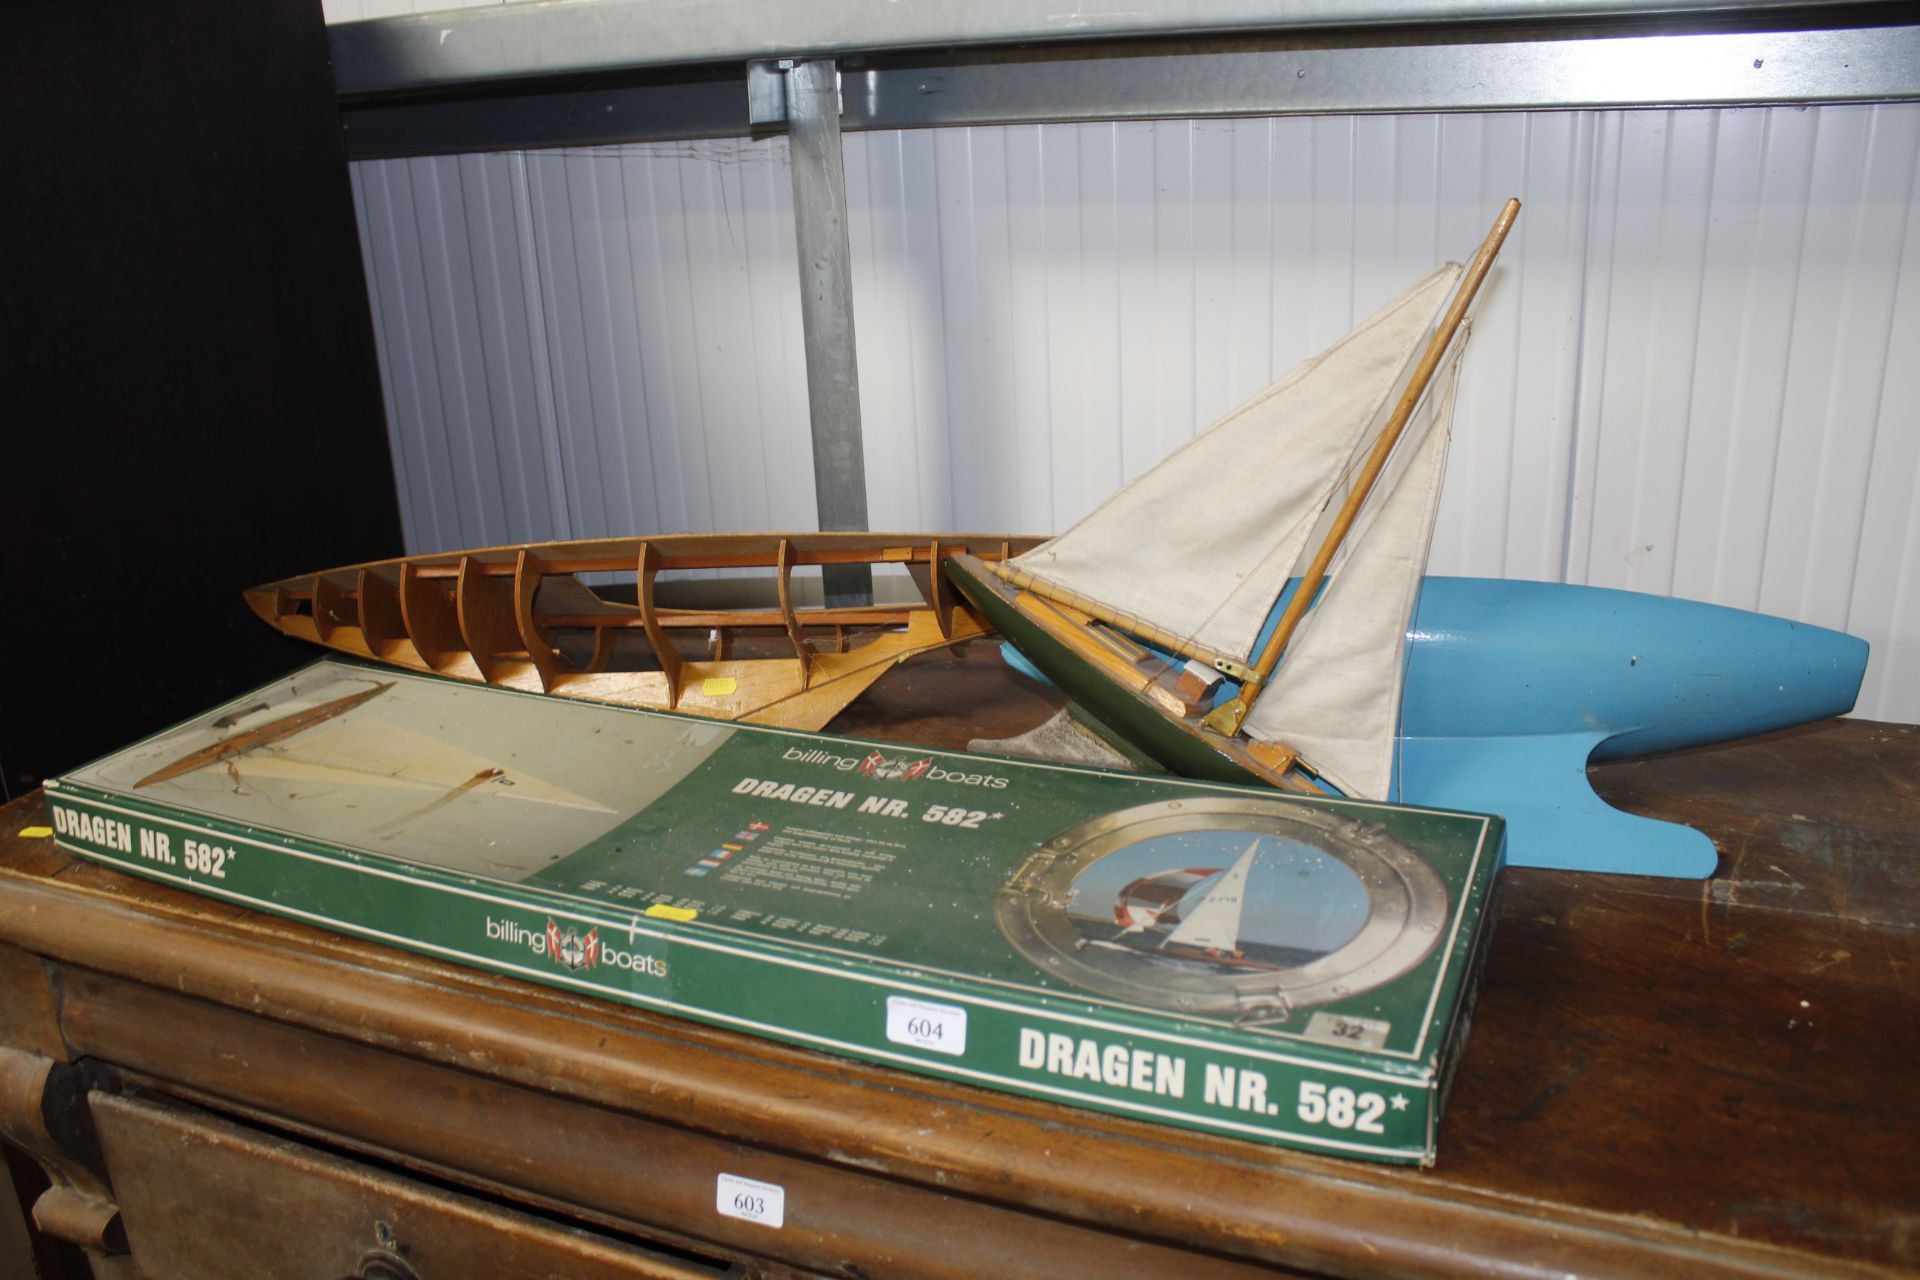 A Billing Boat Dragen NR.582 model sailing yacht i